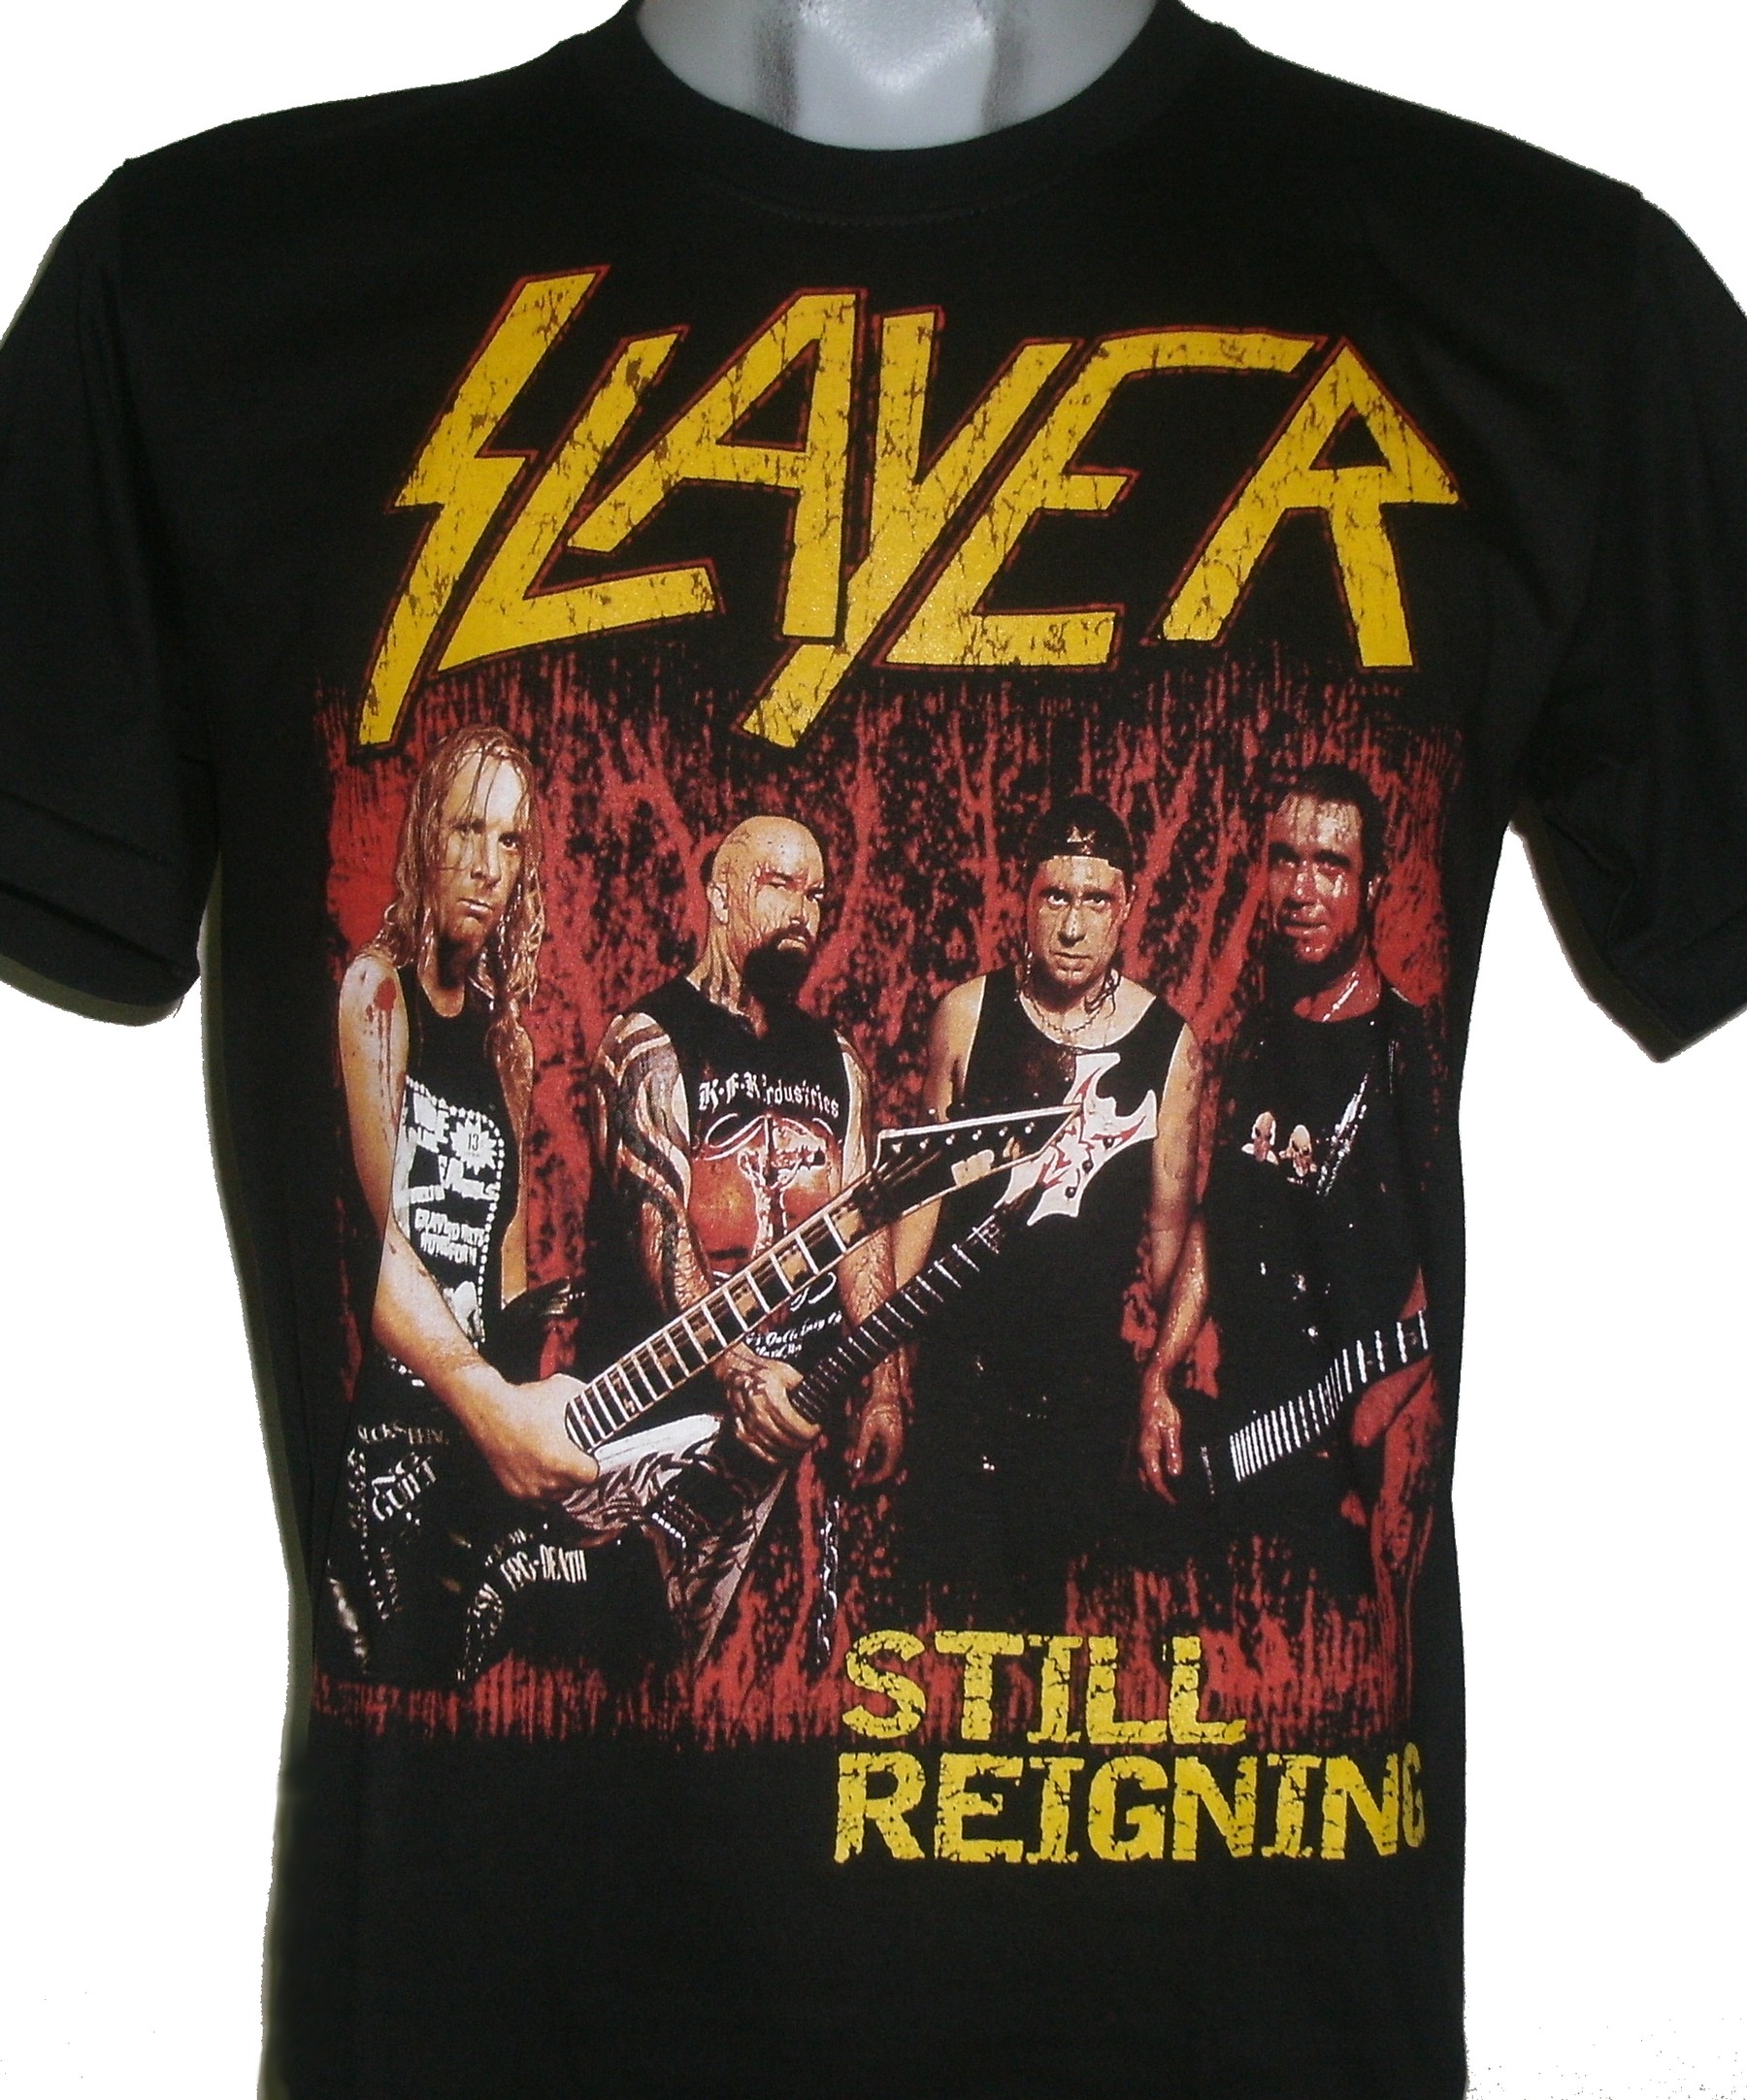 Training slayer читы. Slayer still reigning 2004. Slayer 96 футболка. Торба группы Slayer. Футболки с принтами группы Slayer.